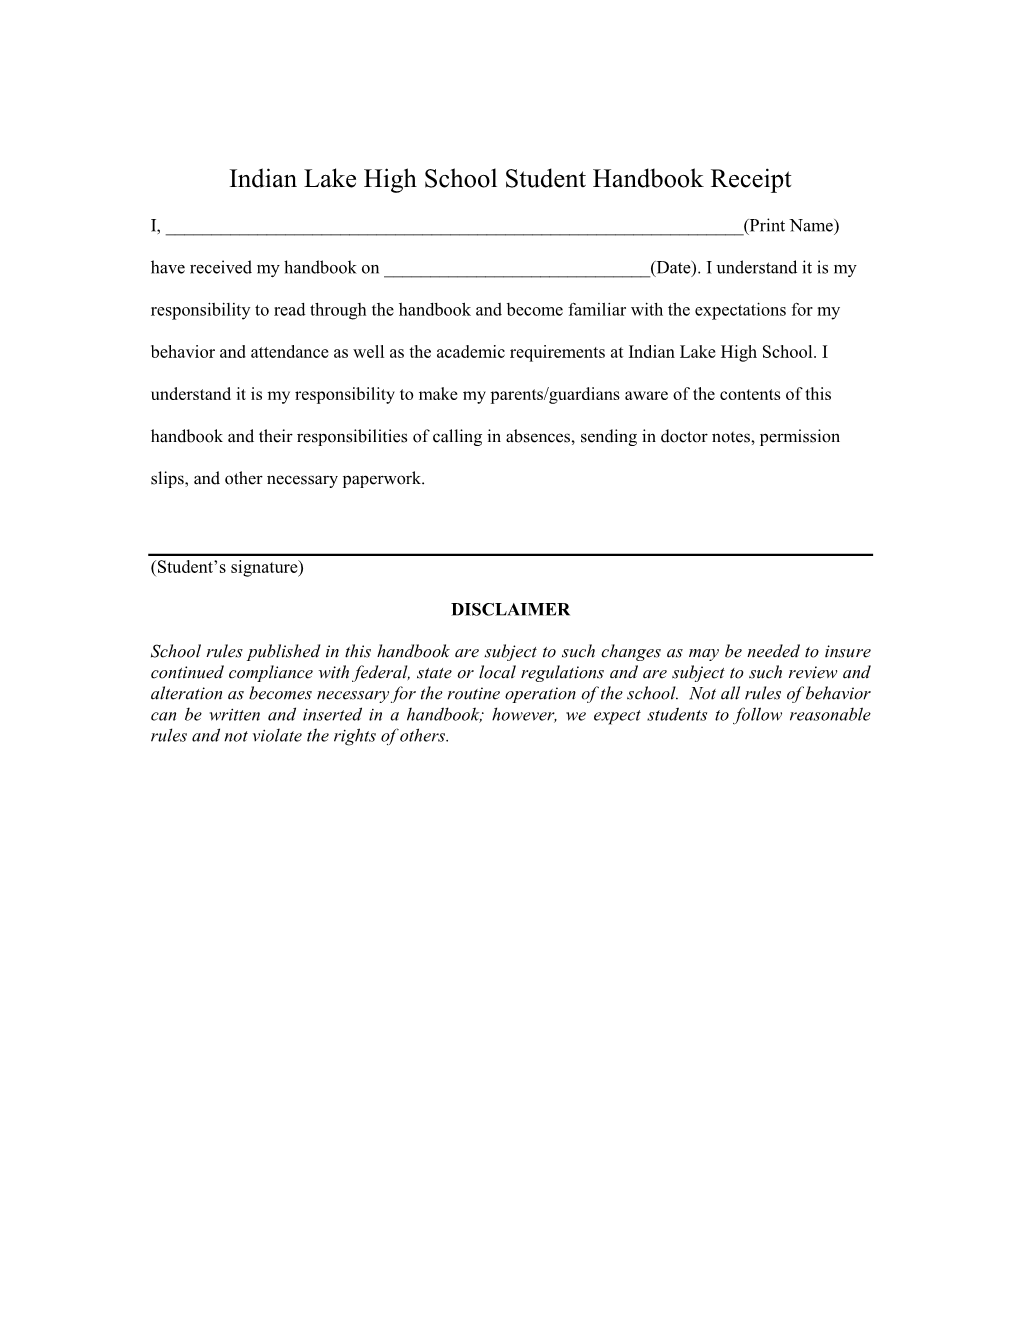 Indian Lake High School Student Handbook Receipt